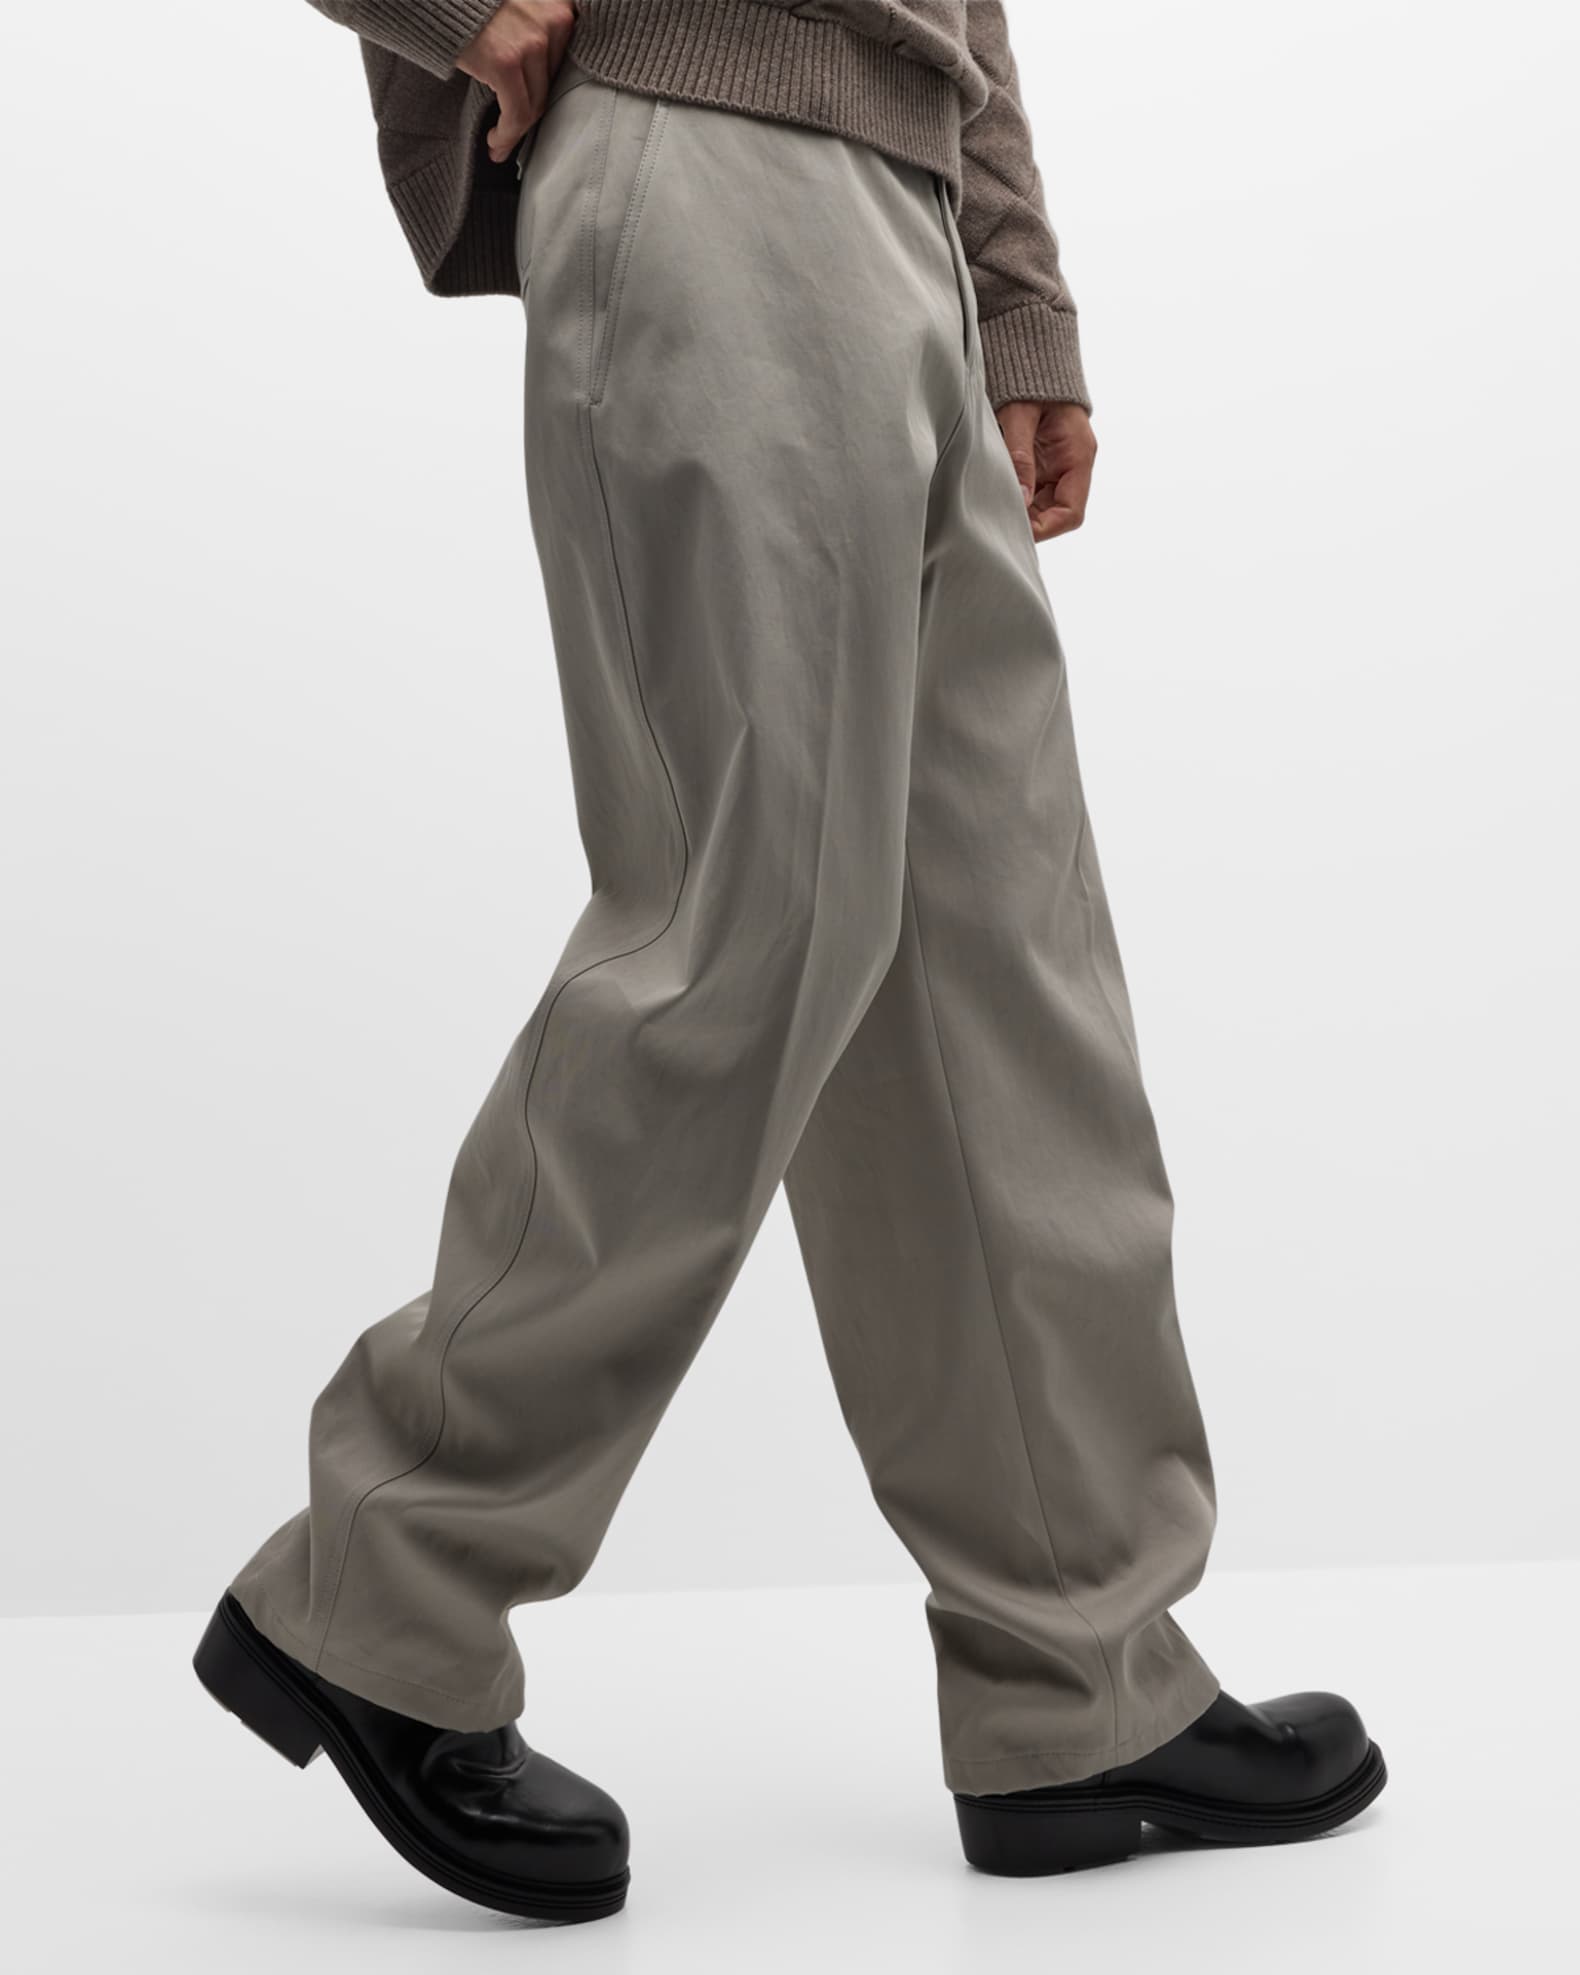 Bottega Veneta Men's Baggy Cotton Twill Pants | Neiman Marcus